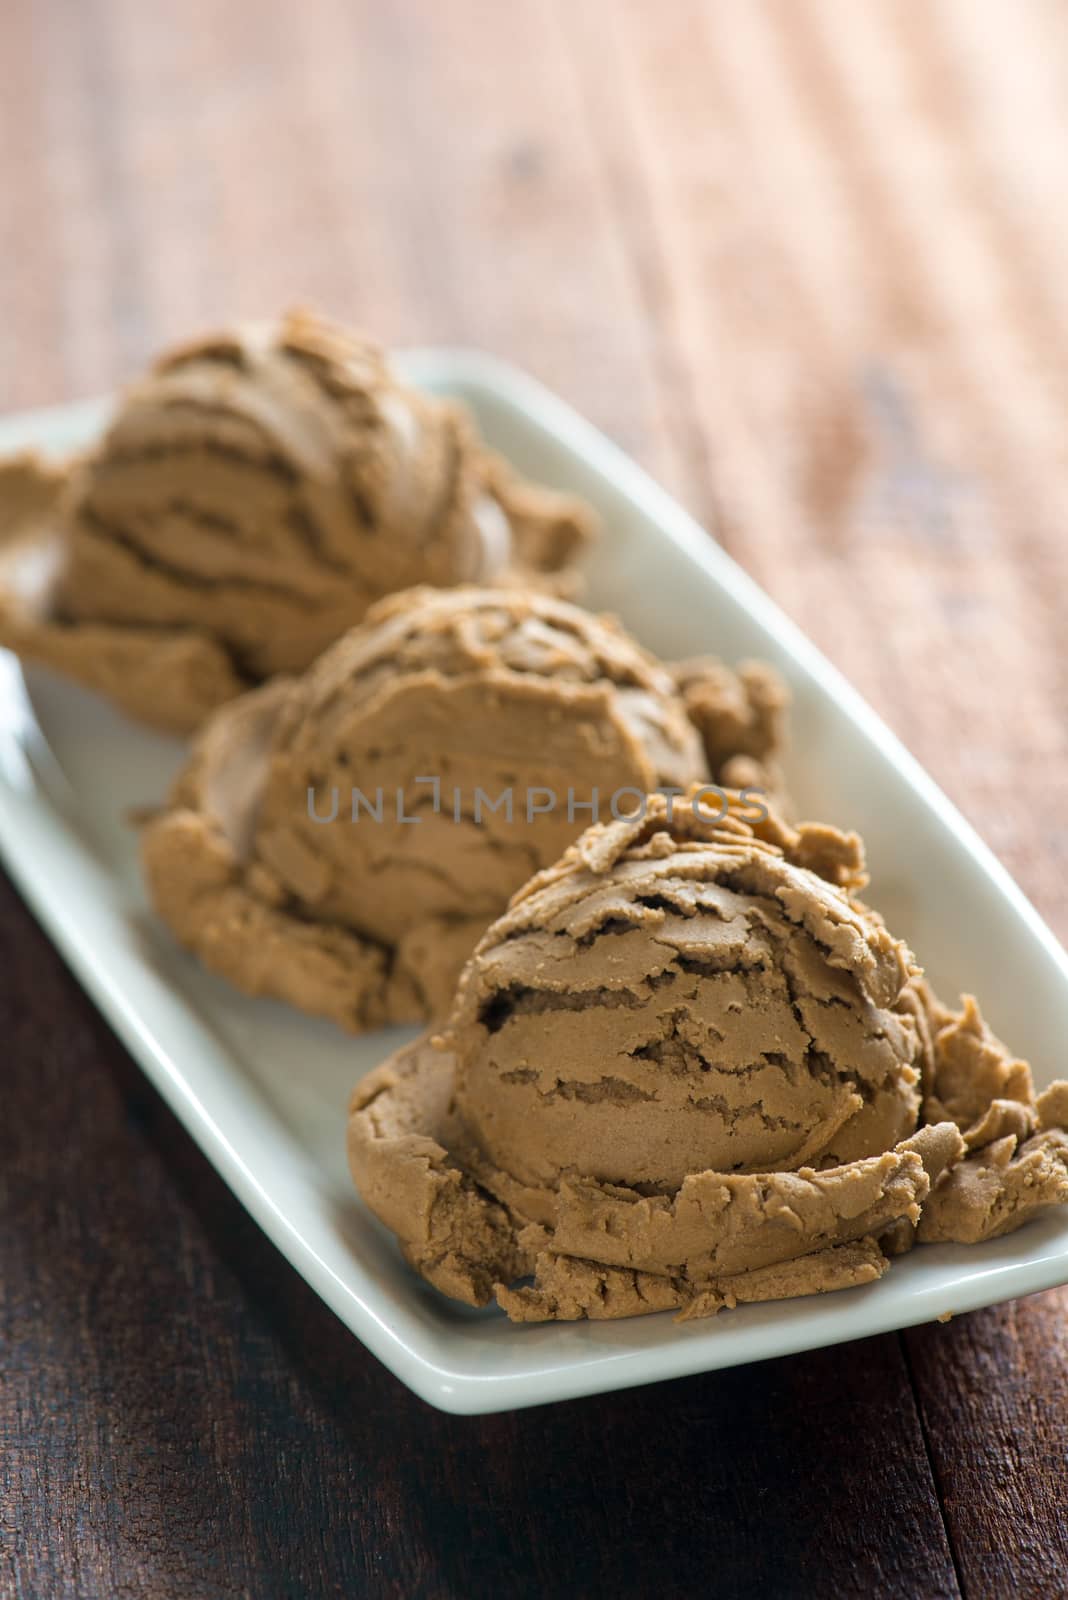 Chocolate ice cream in plate on dark wooden background.